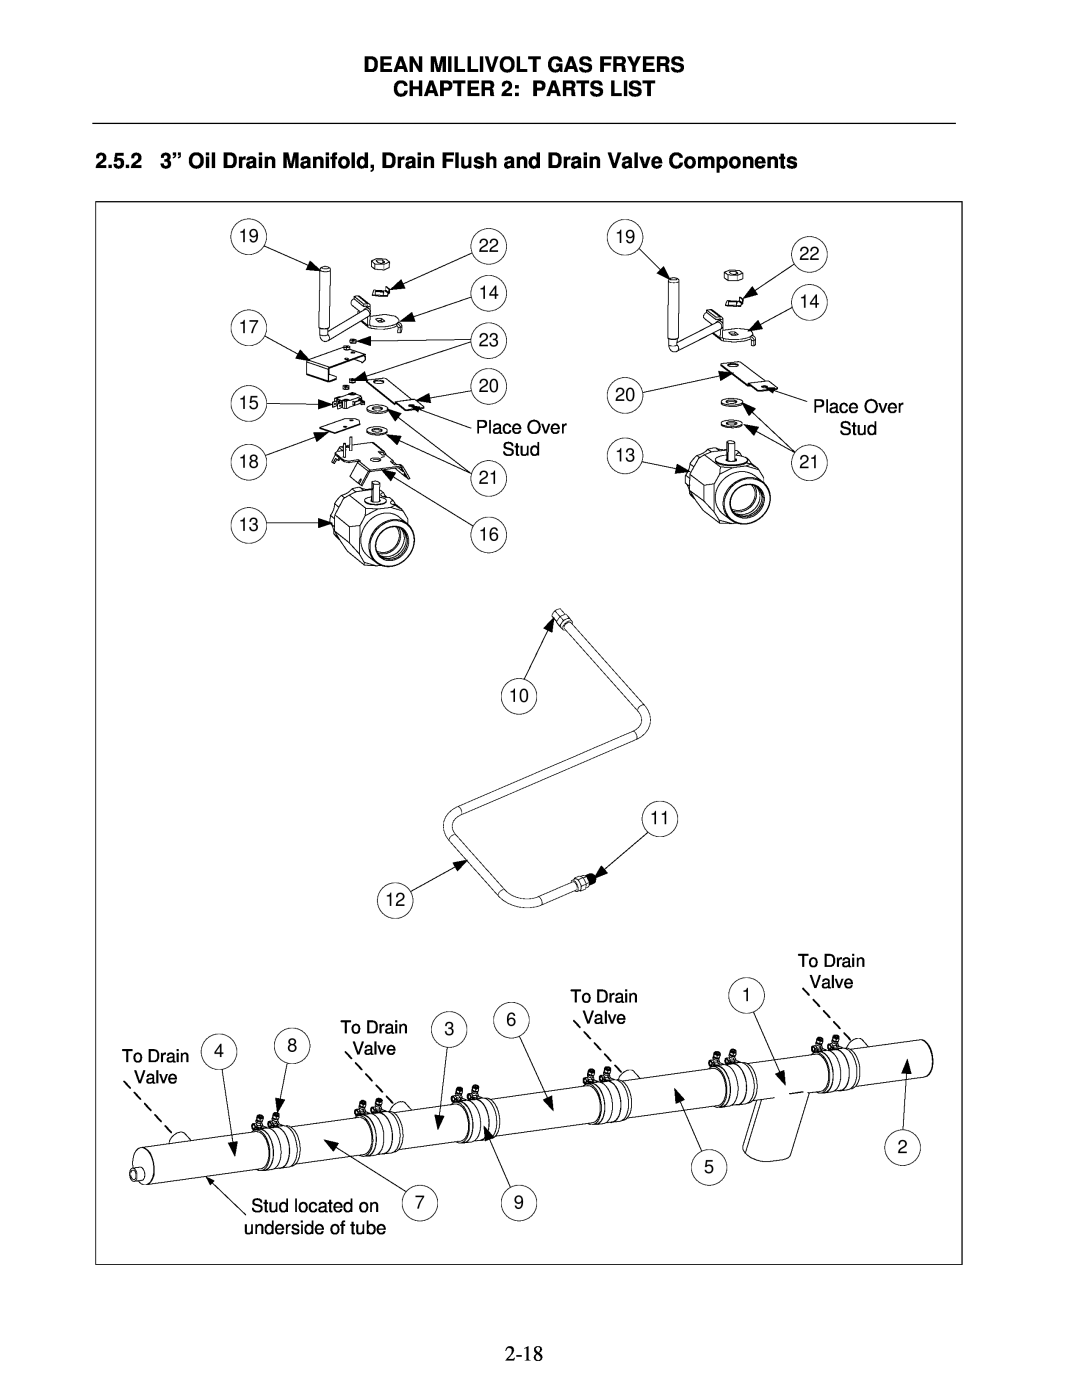 Frymaster Super Marathon Series, Super Runner Series manual Dean Millivolt Gas Fryers : Parts List 